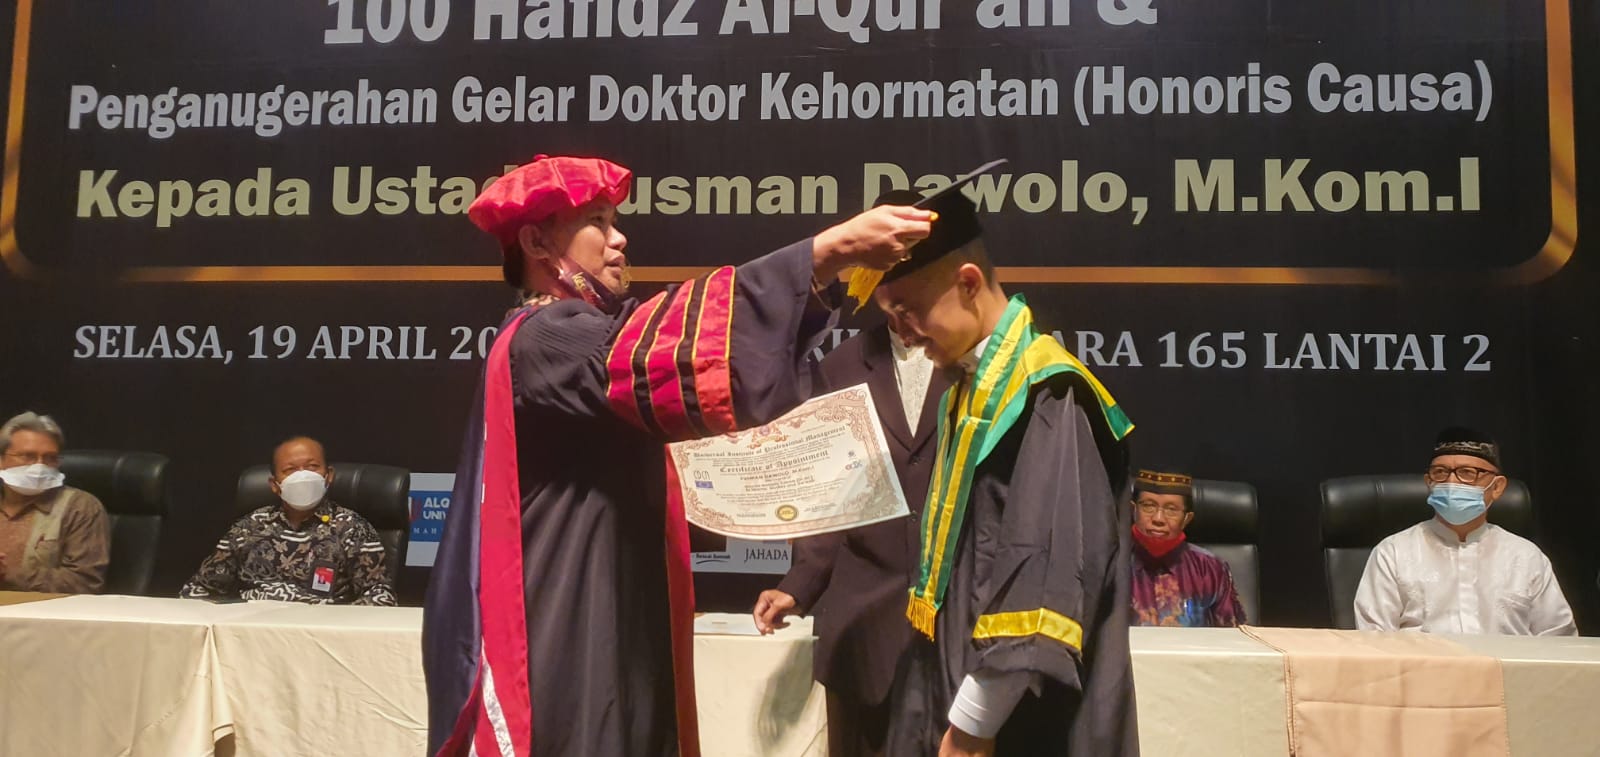 Ustaz Yusman Dawolo Raih Gelar Doktor Honoris Causa dari UIPM USA